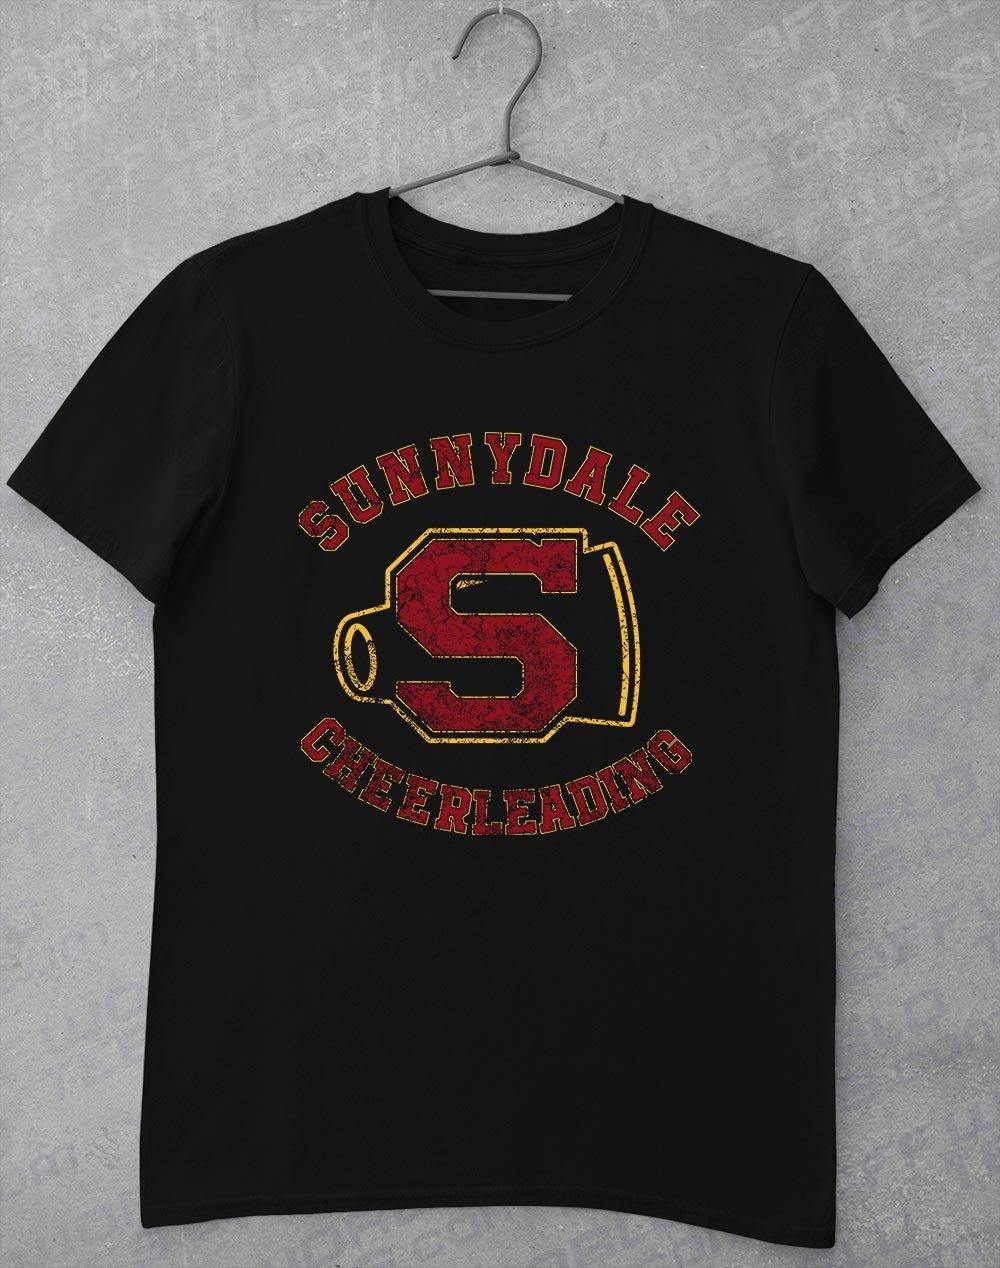 Distressed Sunnydale Cheerleading T-Shirt S / Black  - Off World Tees